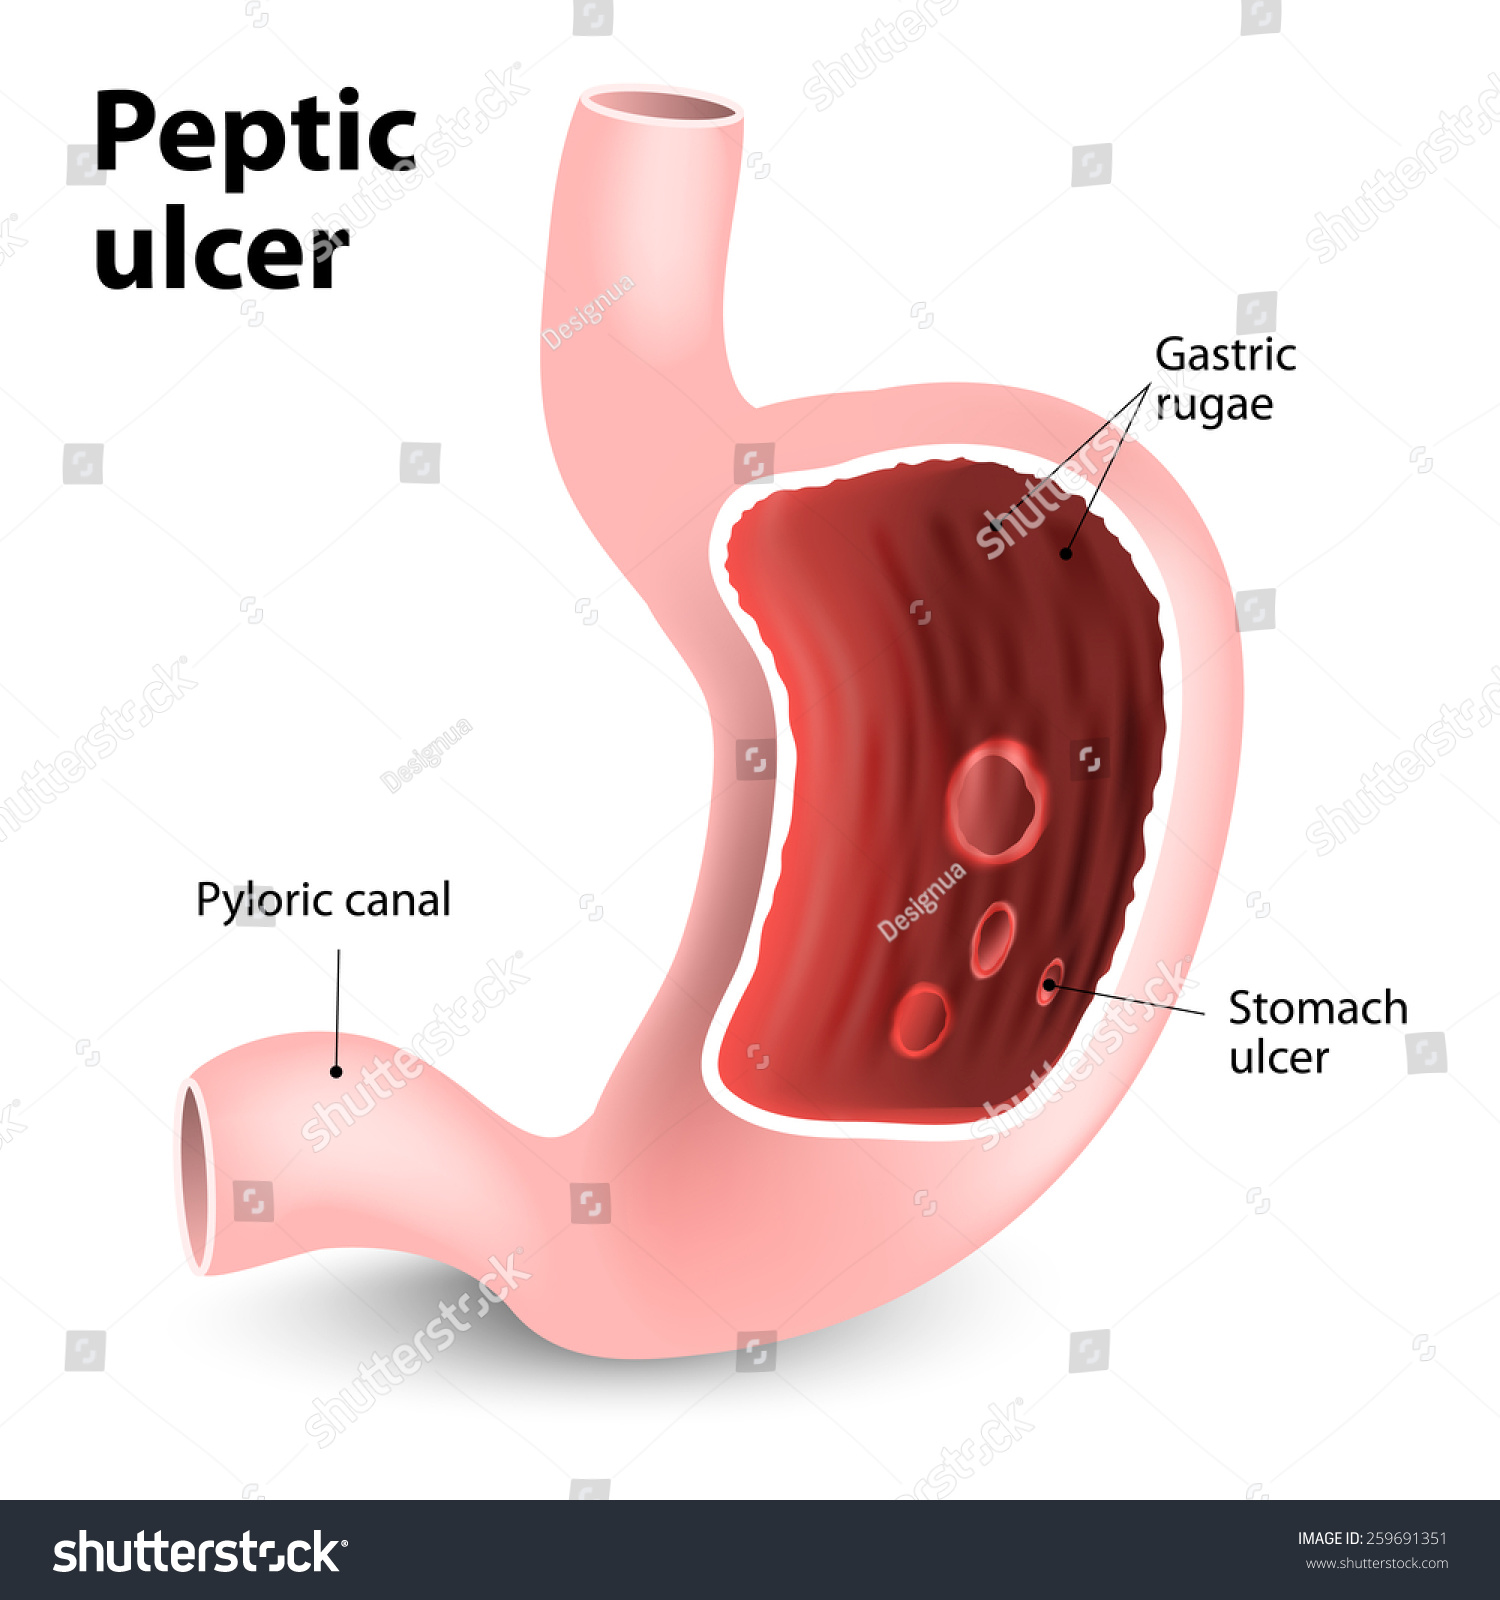 Peptic Ulcer Disease  Pud   Vector Illustration Of Diagram